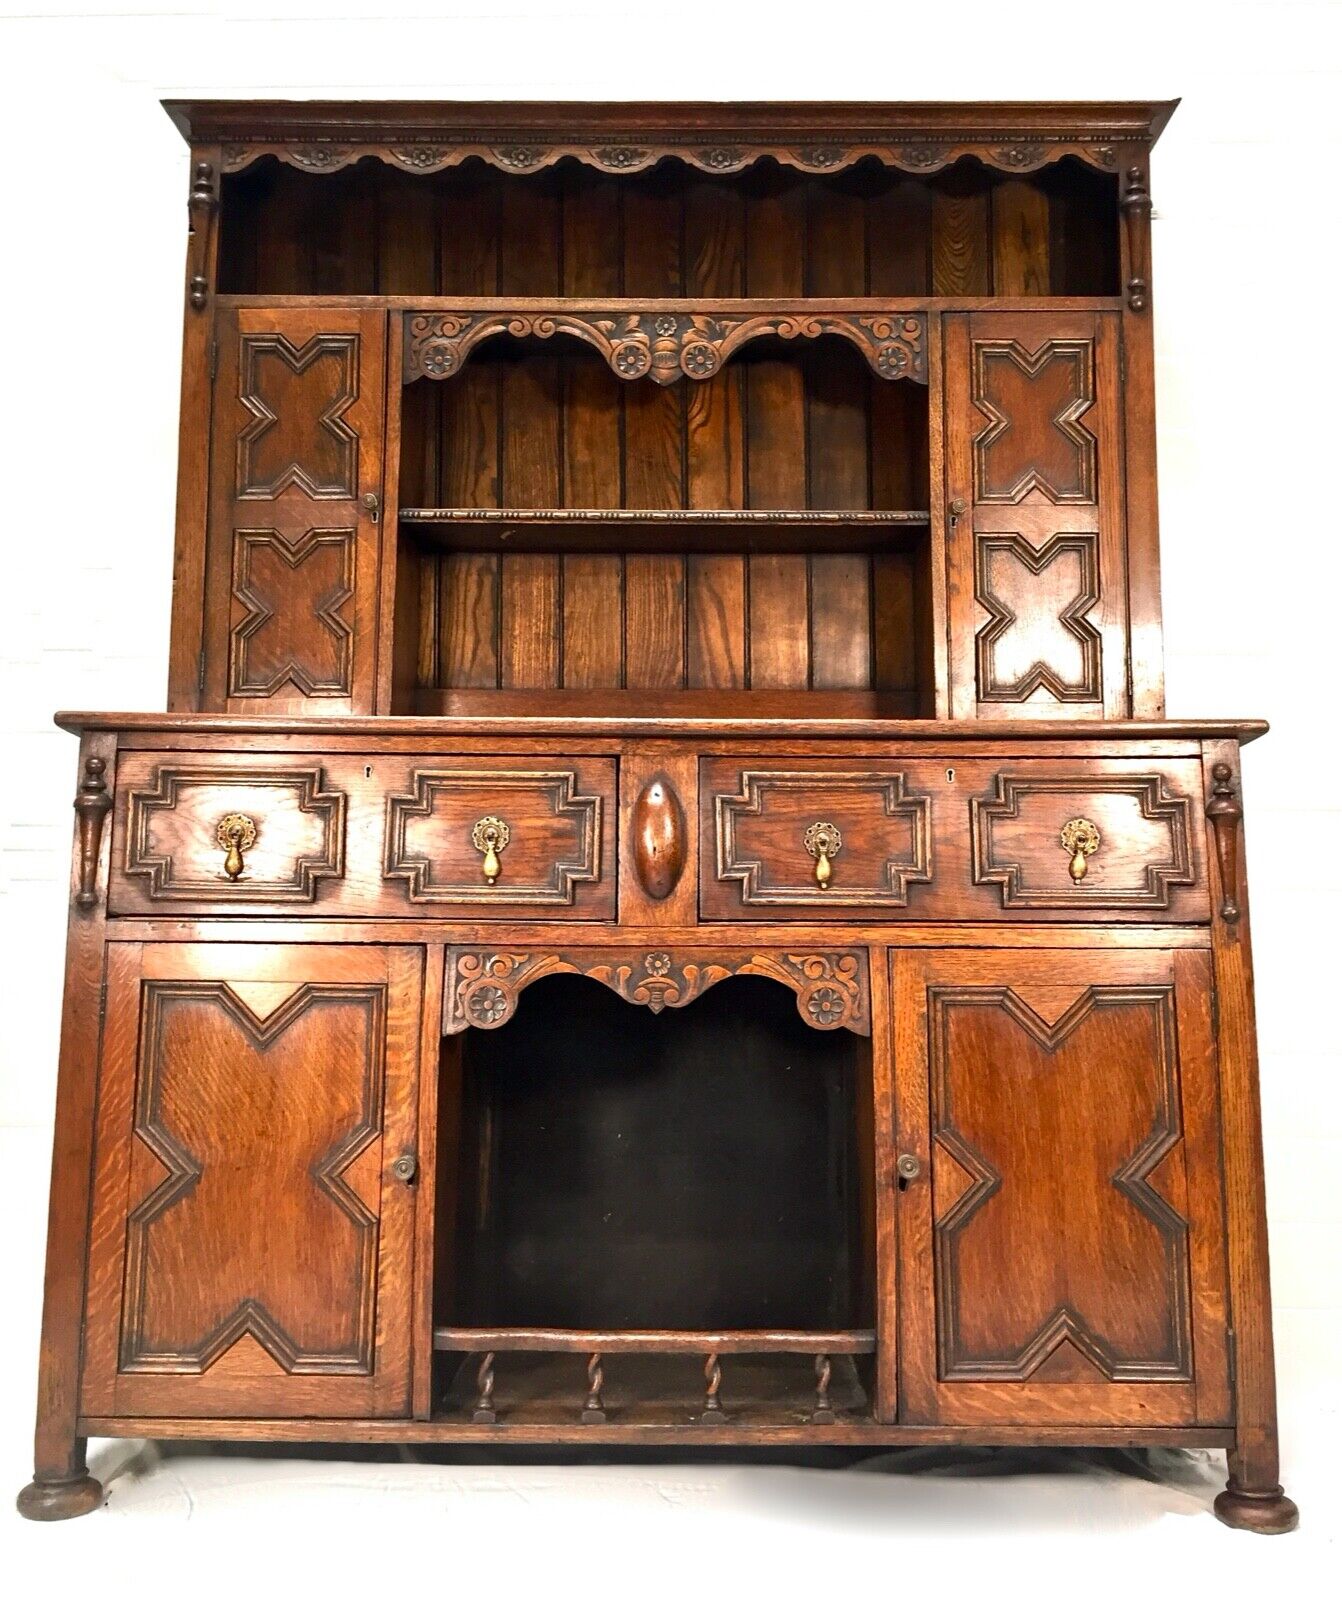 Antique 19th Century Wooden Oak Carved Dresser Cabinet / Display Unit c.1850